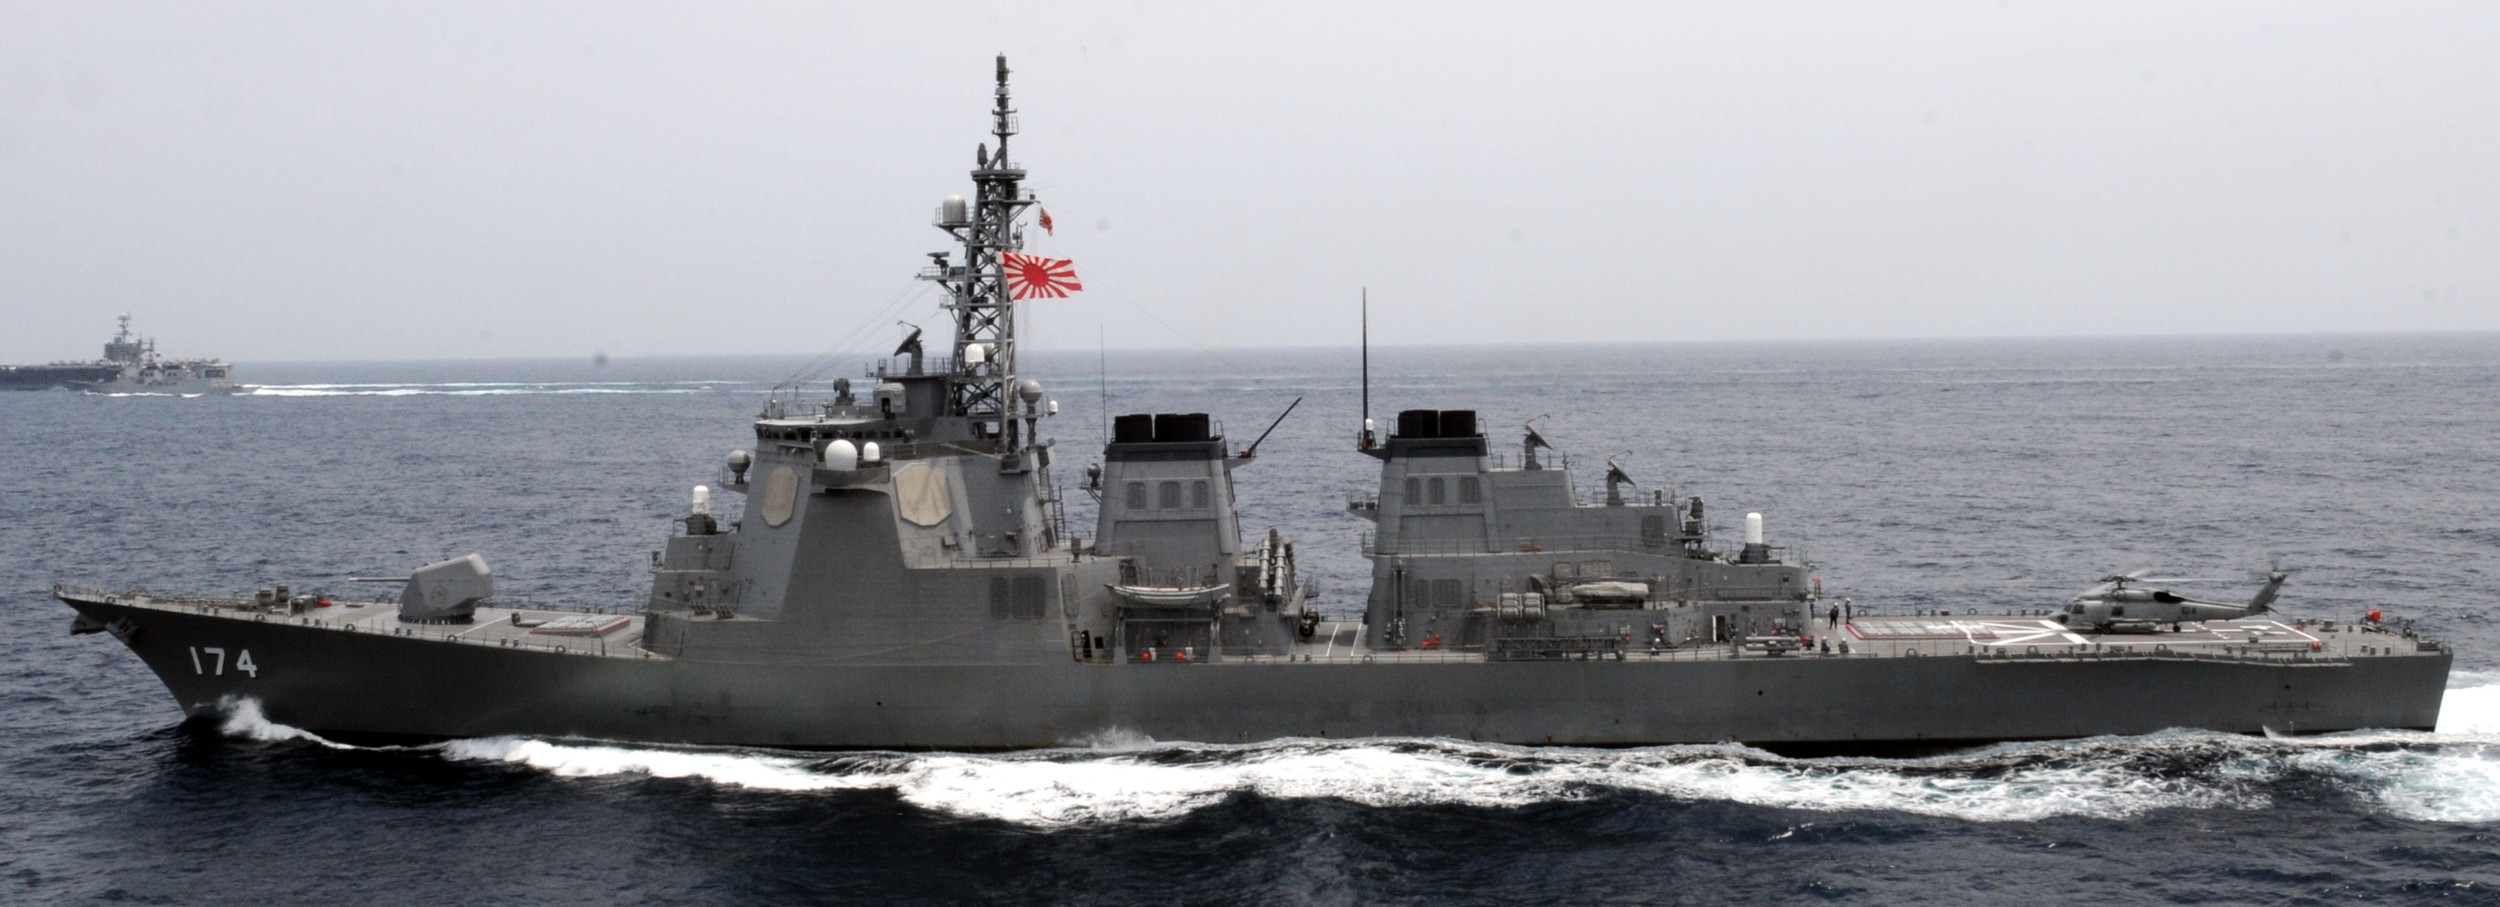 ddg-174 js kirishima kongo class guided missile destroyer aegis japan maritime self defense force jmsdf 17